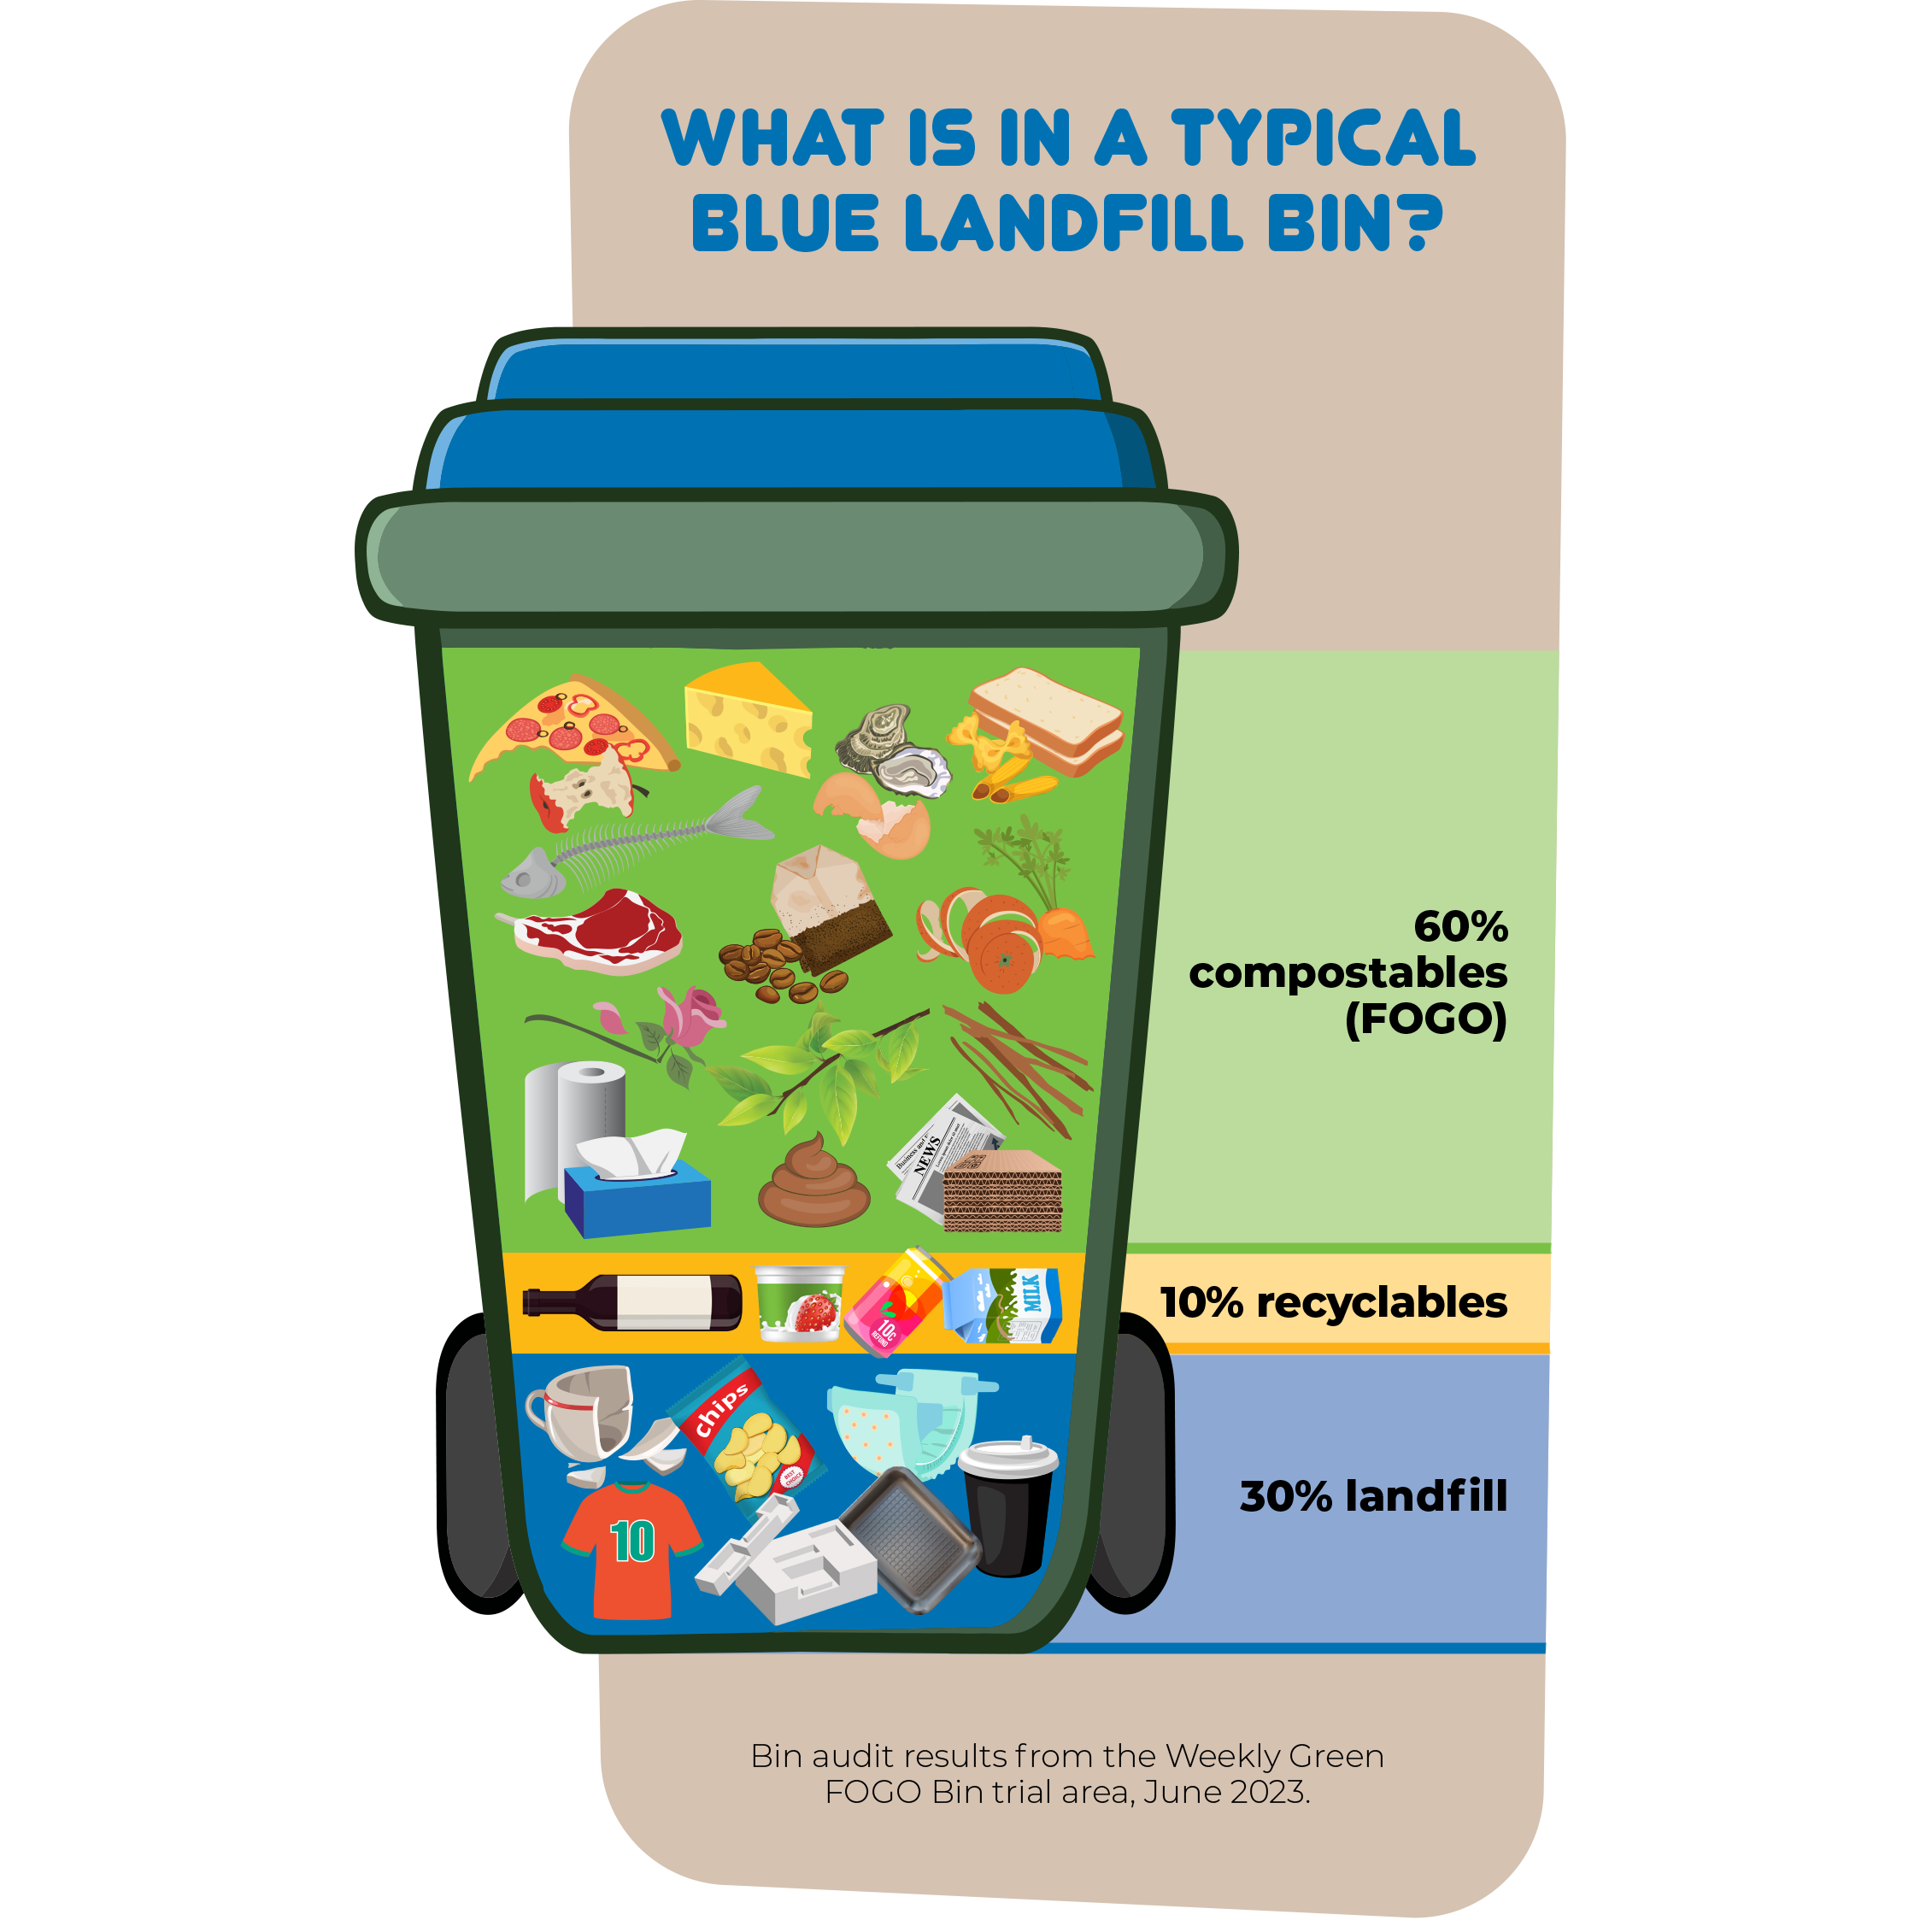 Landfill bin contents of a typical Campbelltown bin